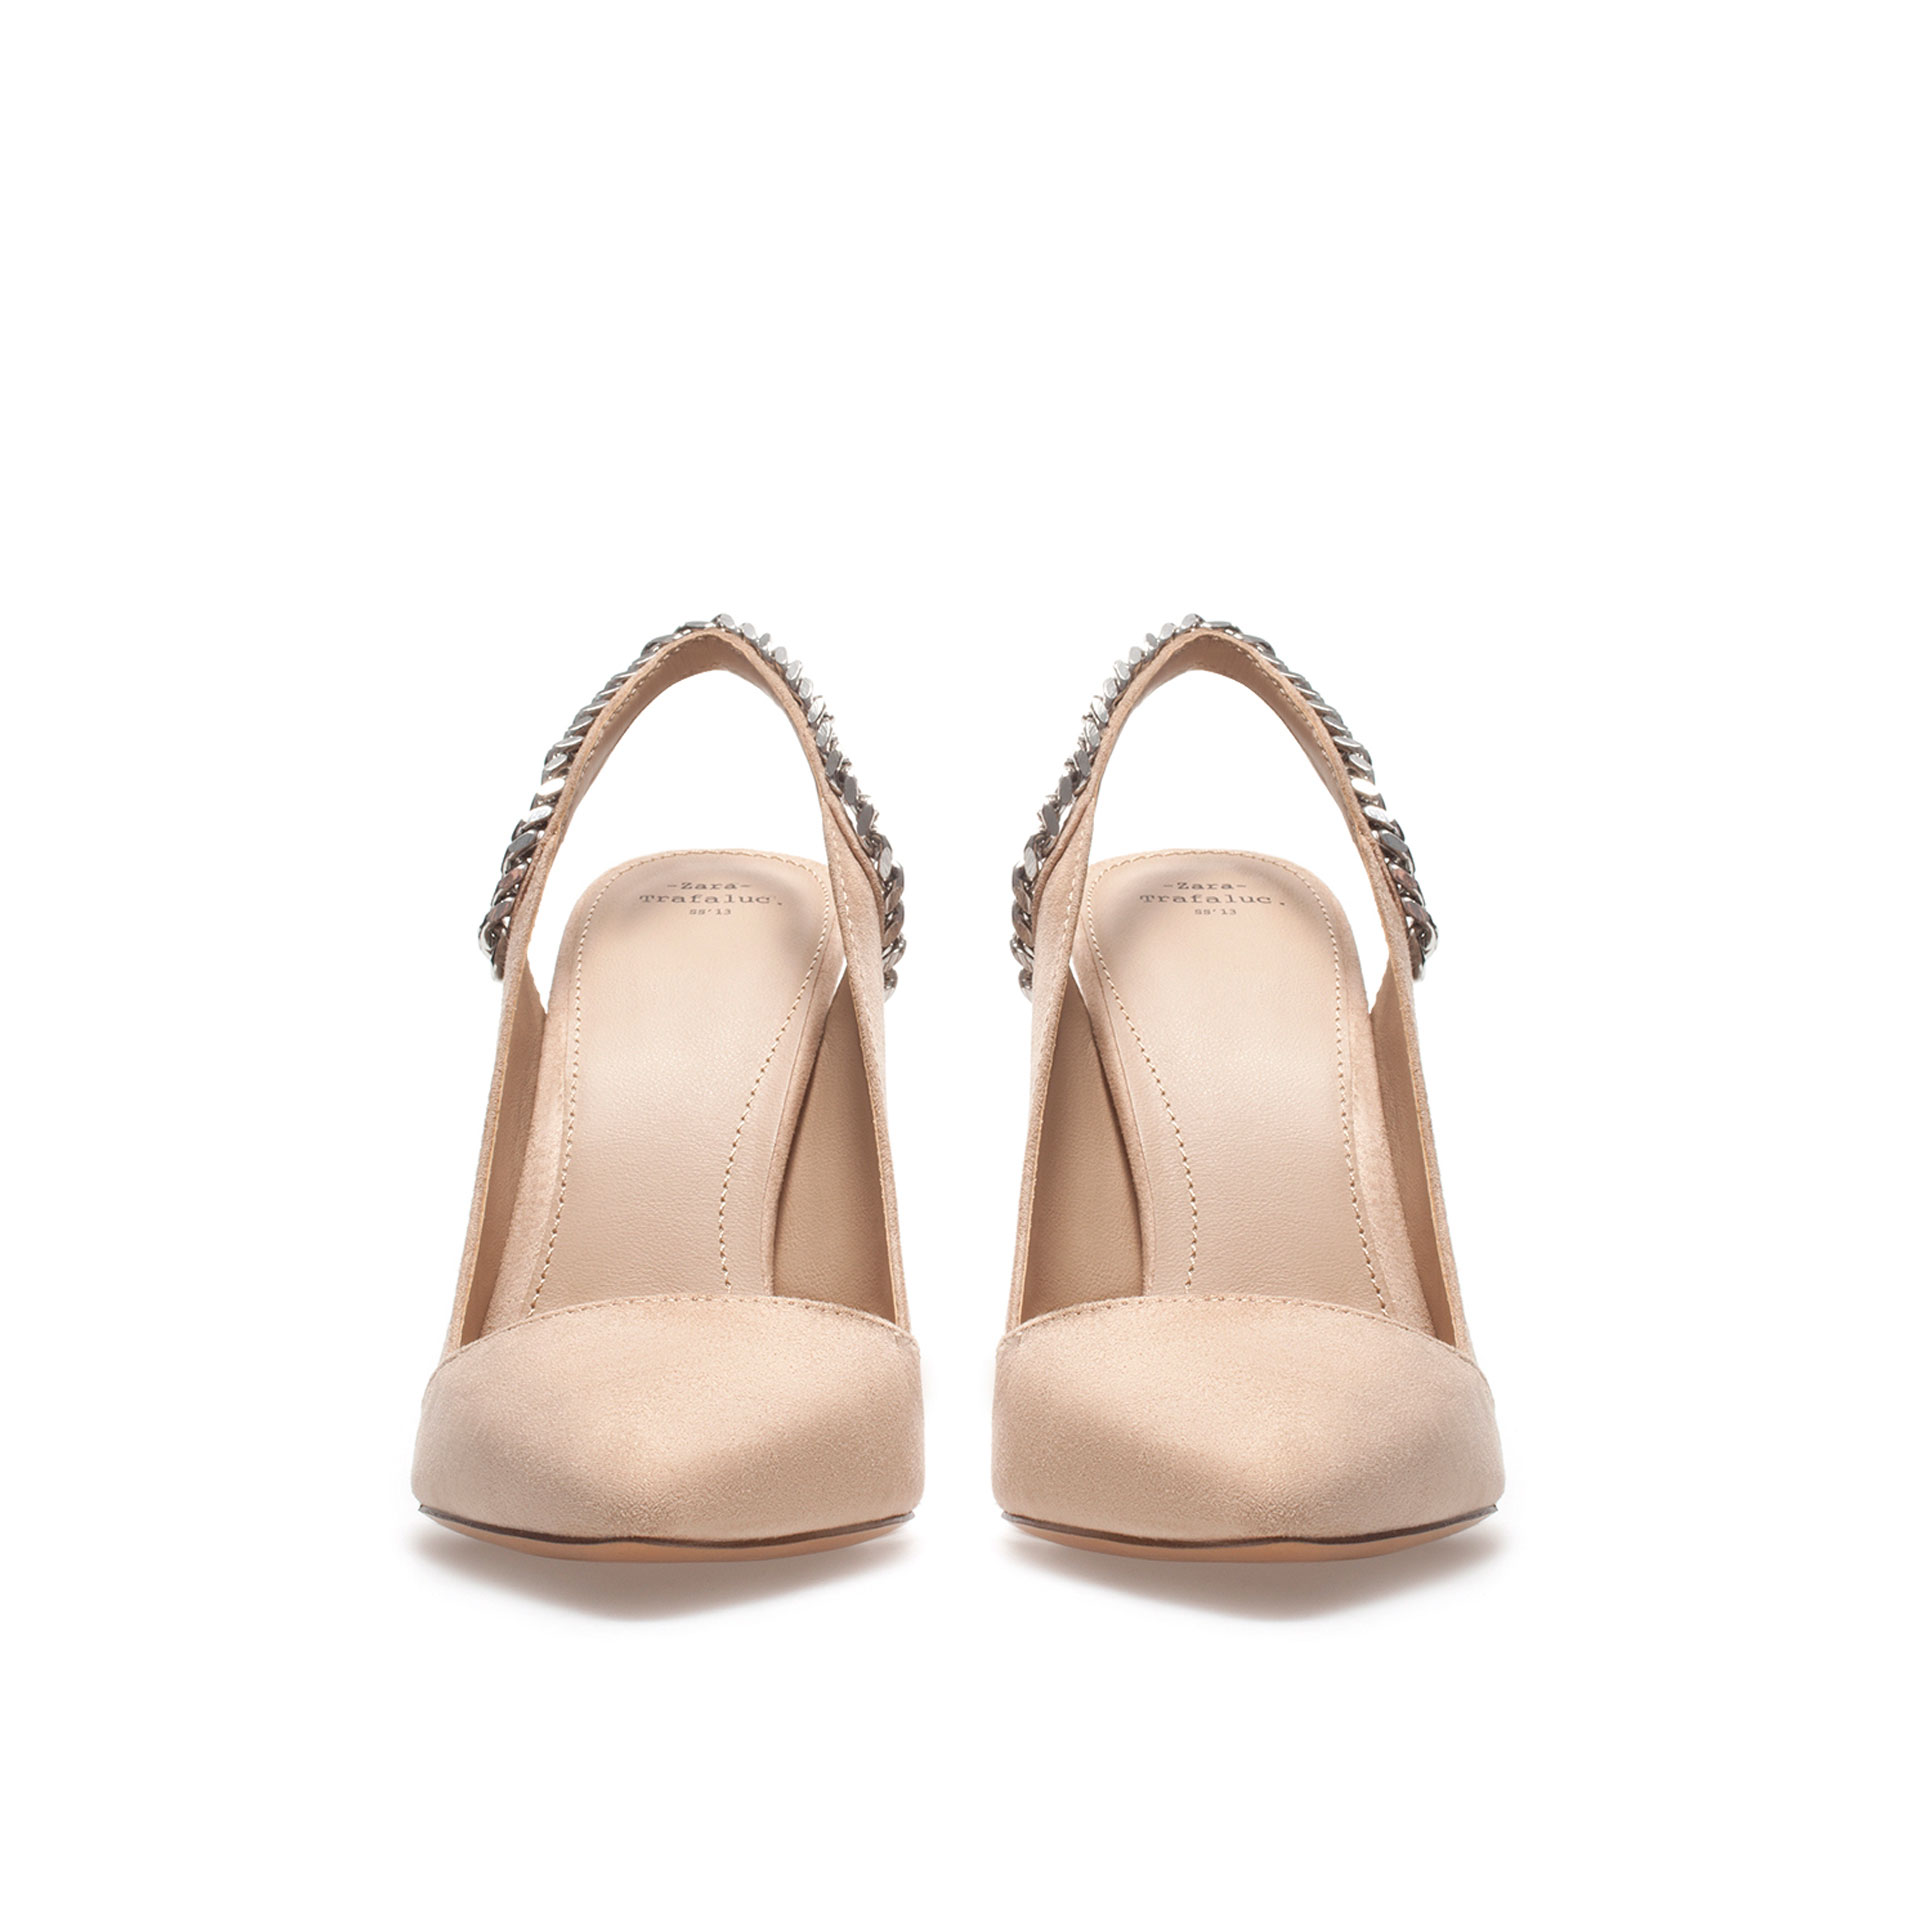 Zara Chain Court Shoe in Natural | Lyst